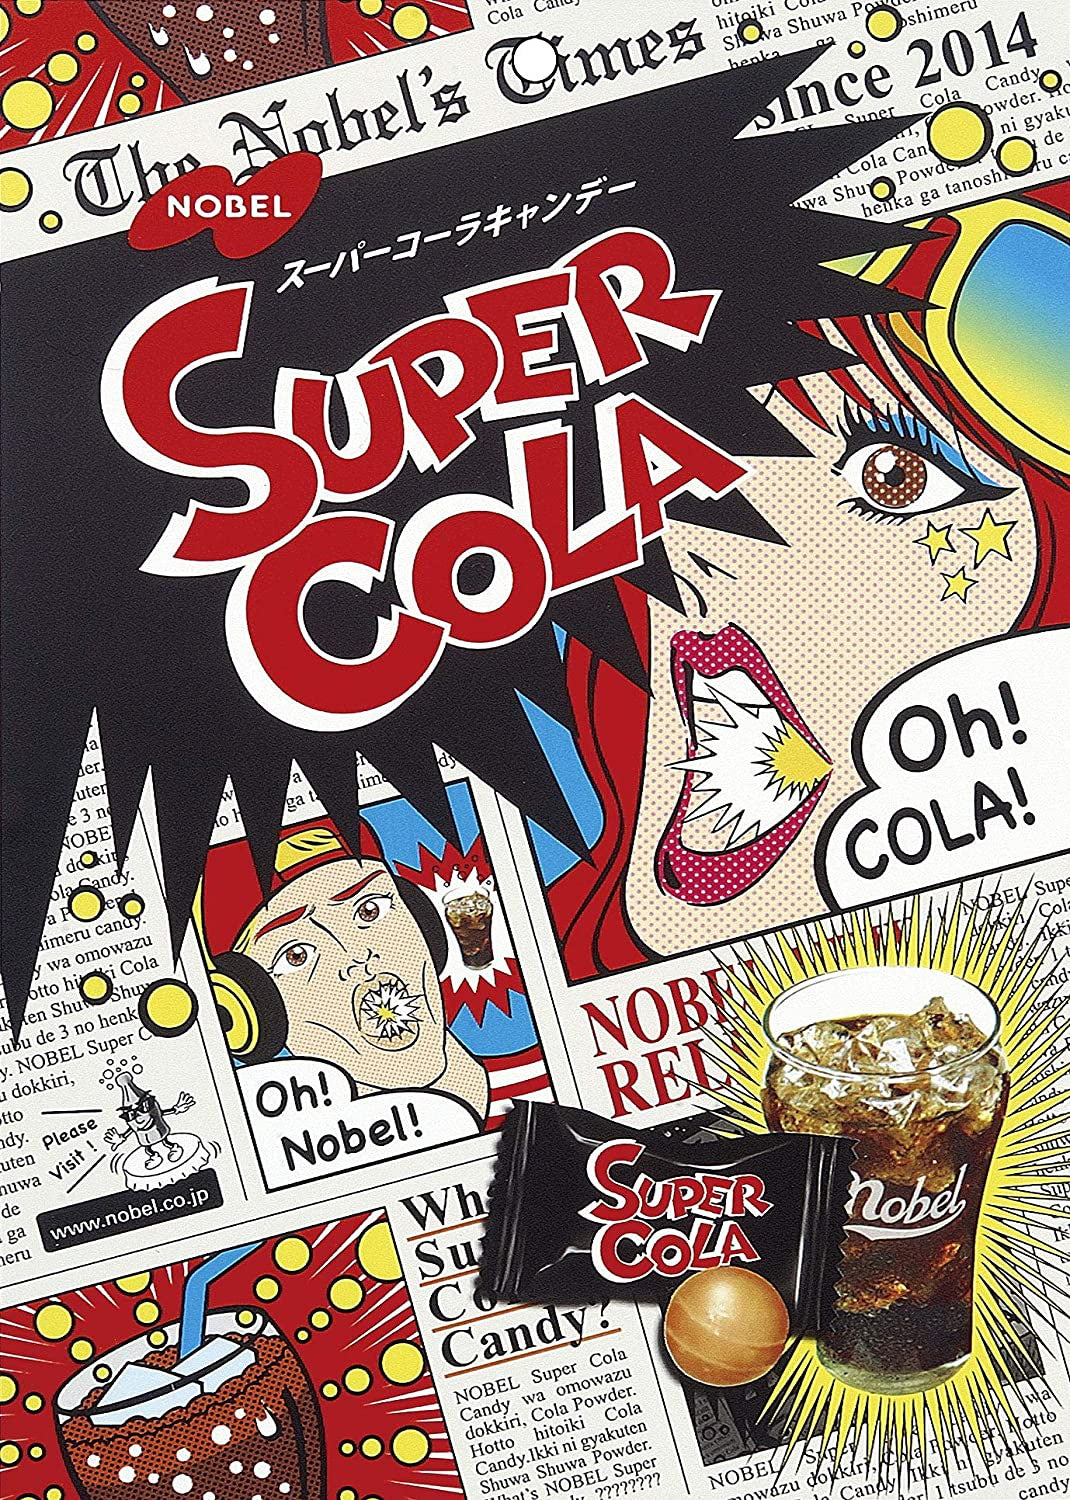 Super Cola Candy 80g